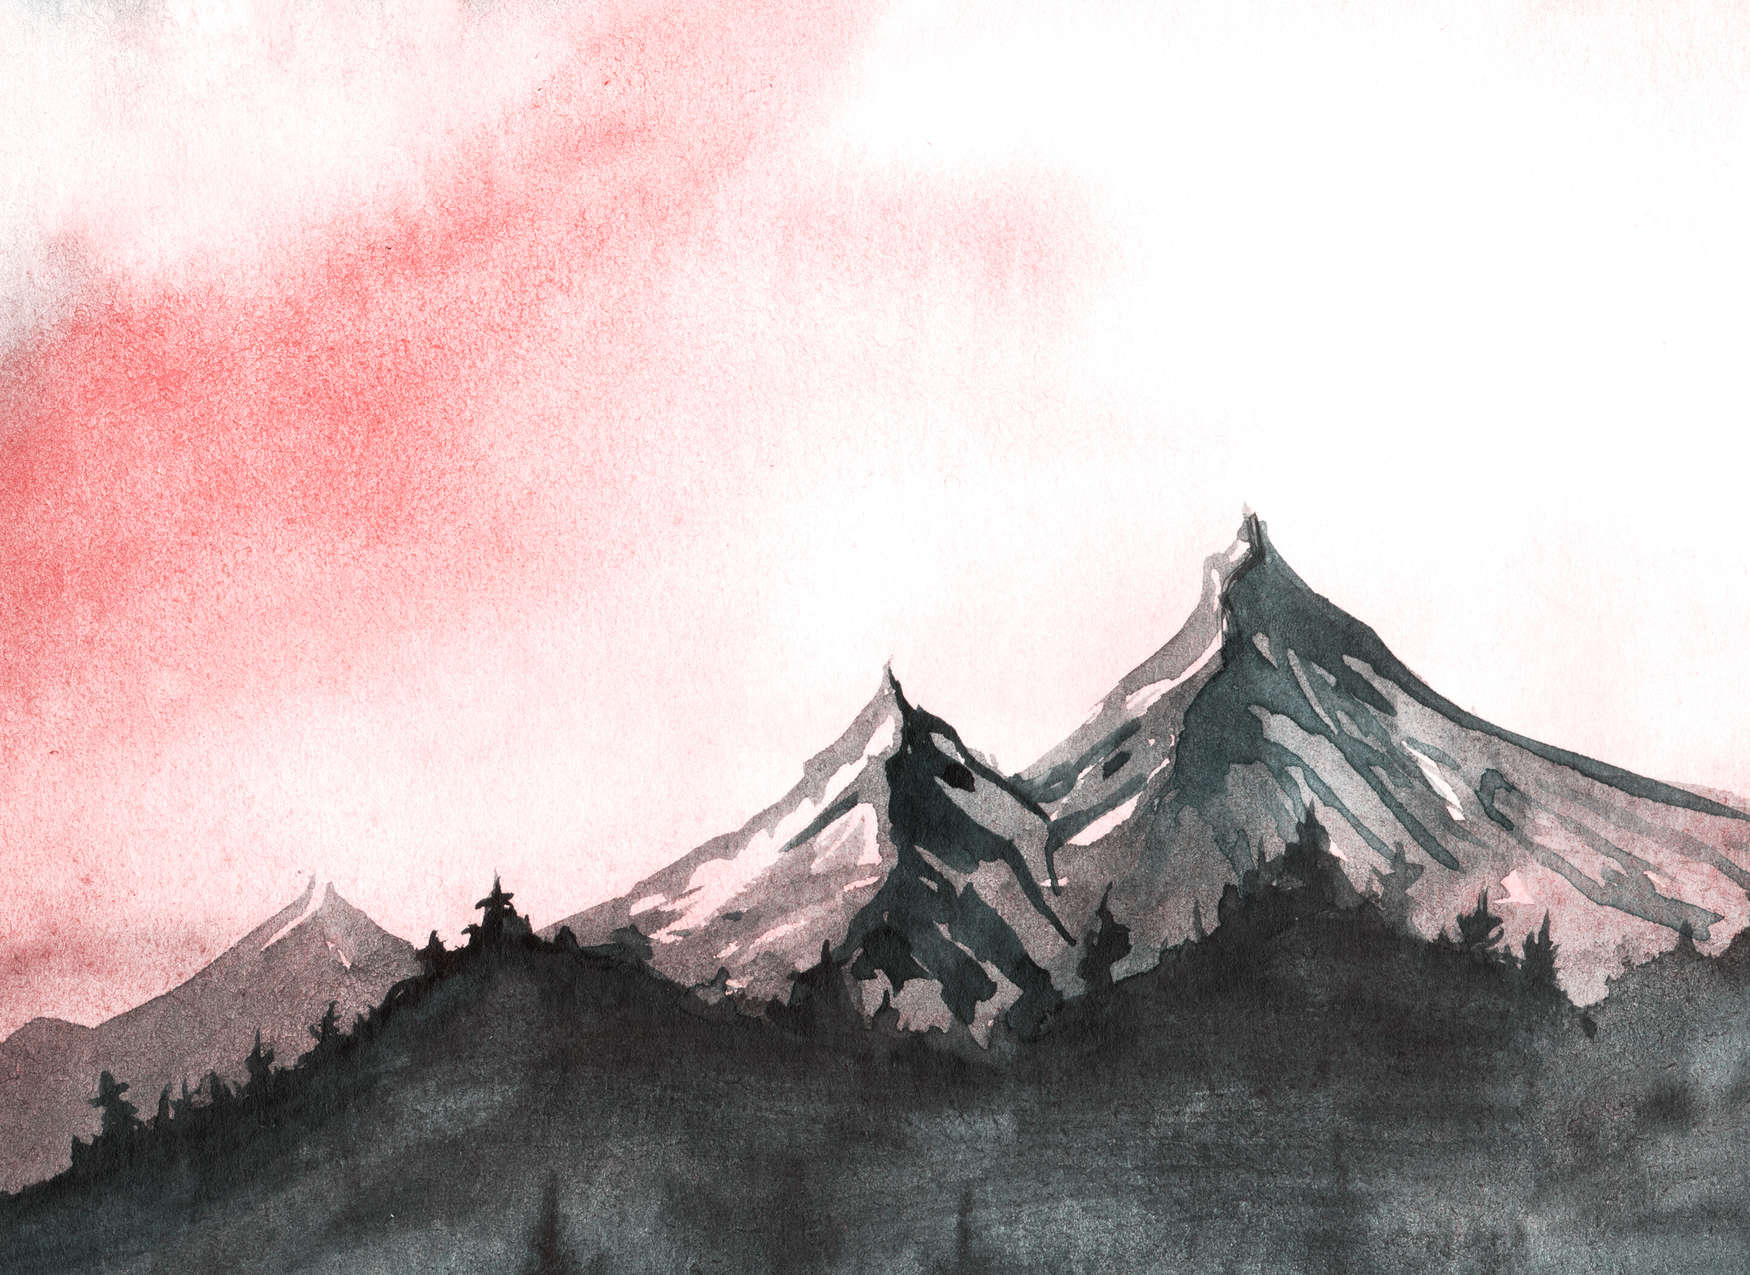             Watercolour Mountain Landscape - Grey, Pink
        